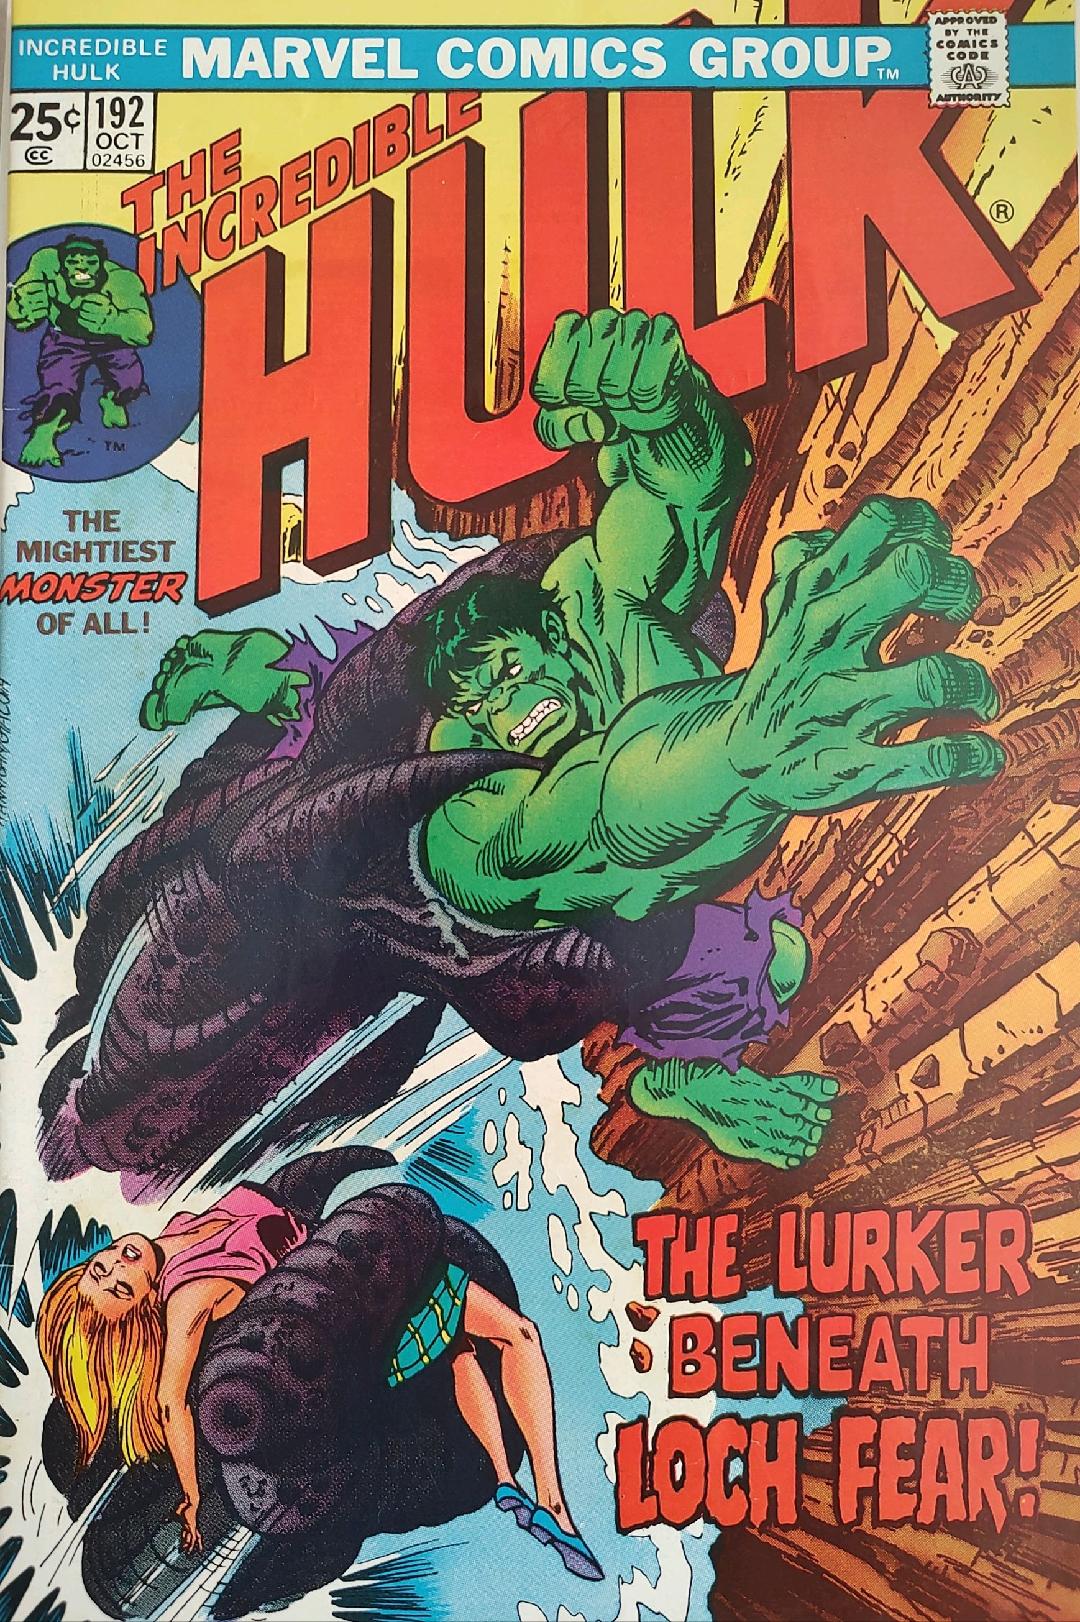 The Incredible Hulk #192 Comic Book Cover